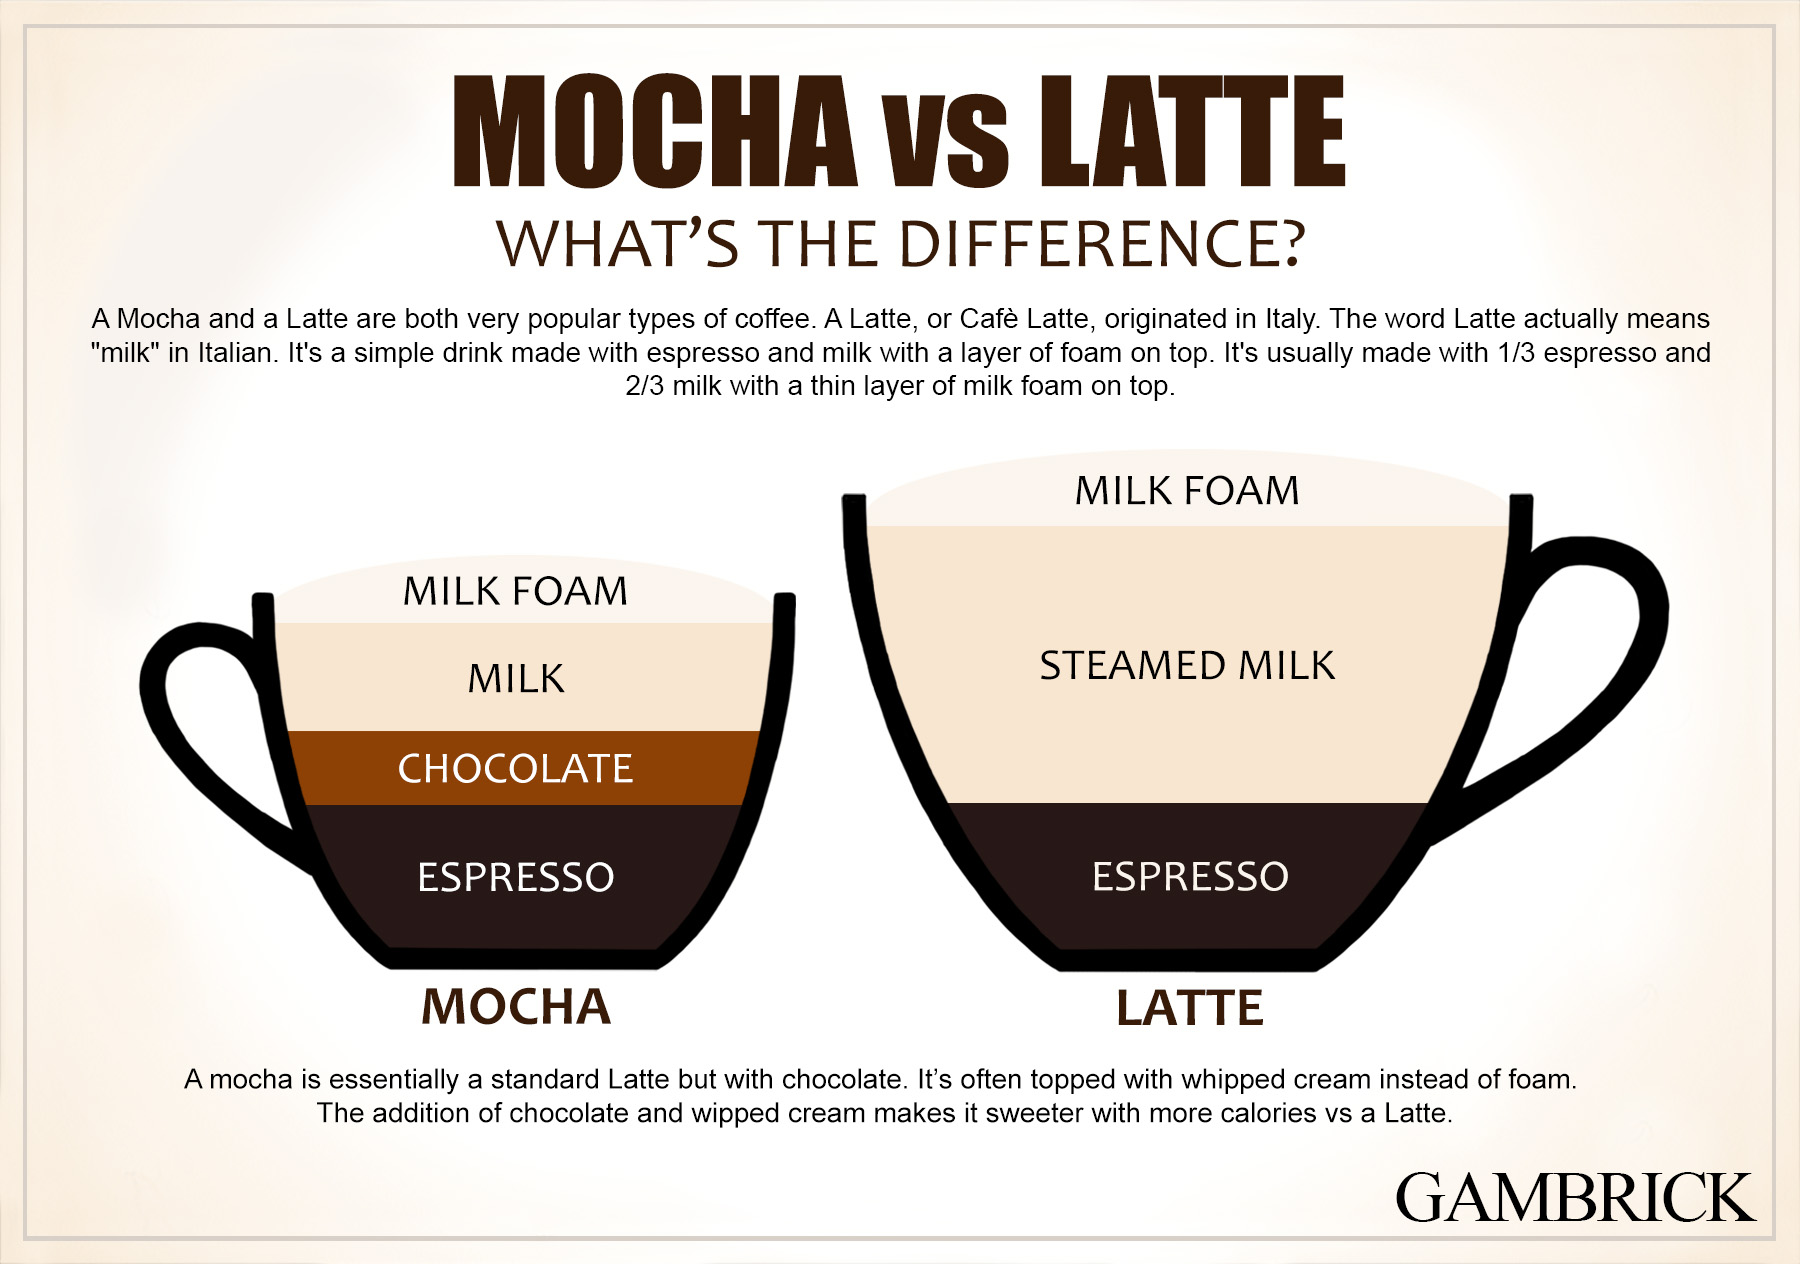 Mocha vs Latte infographic 1.0 copy